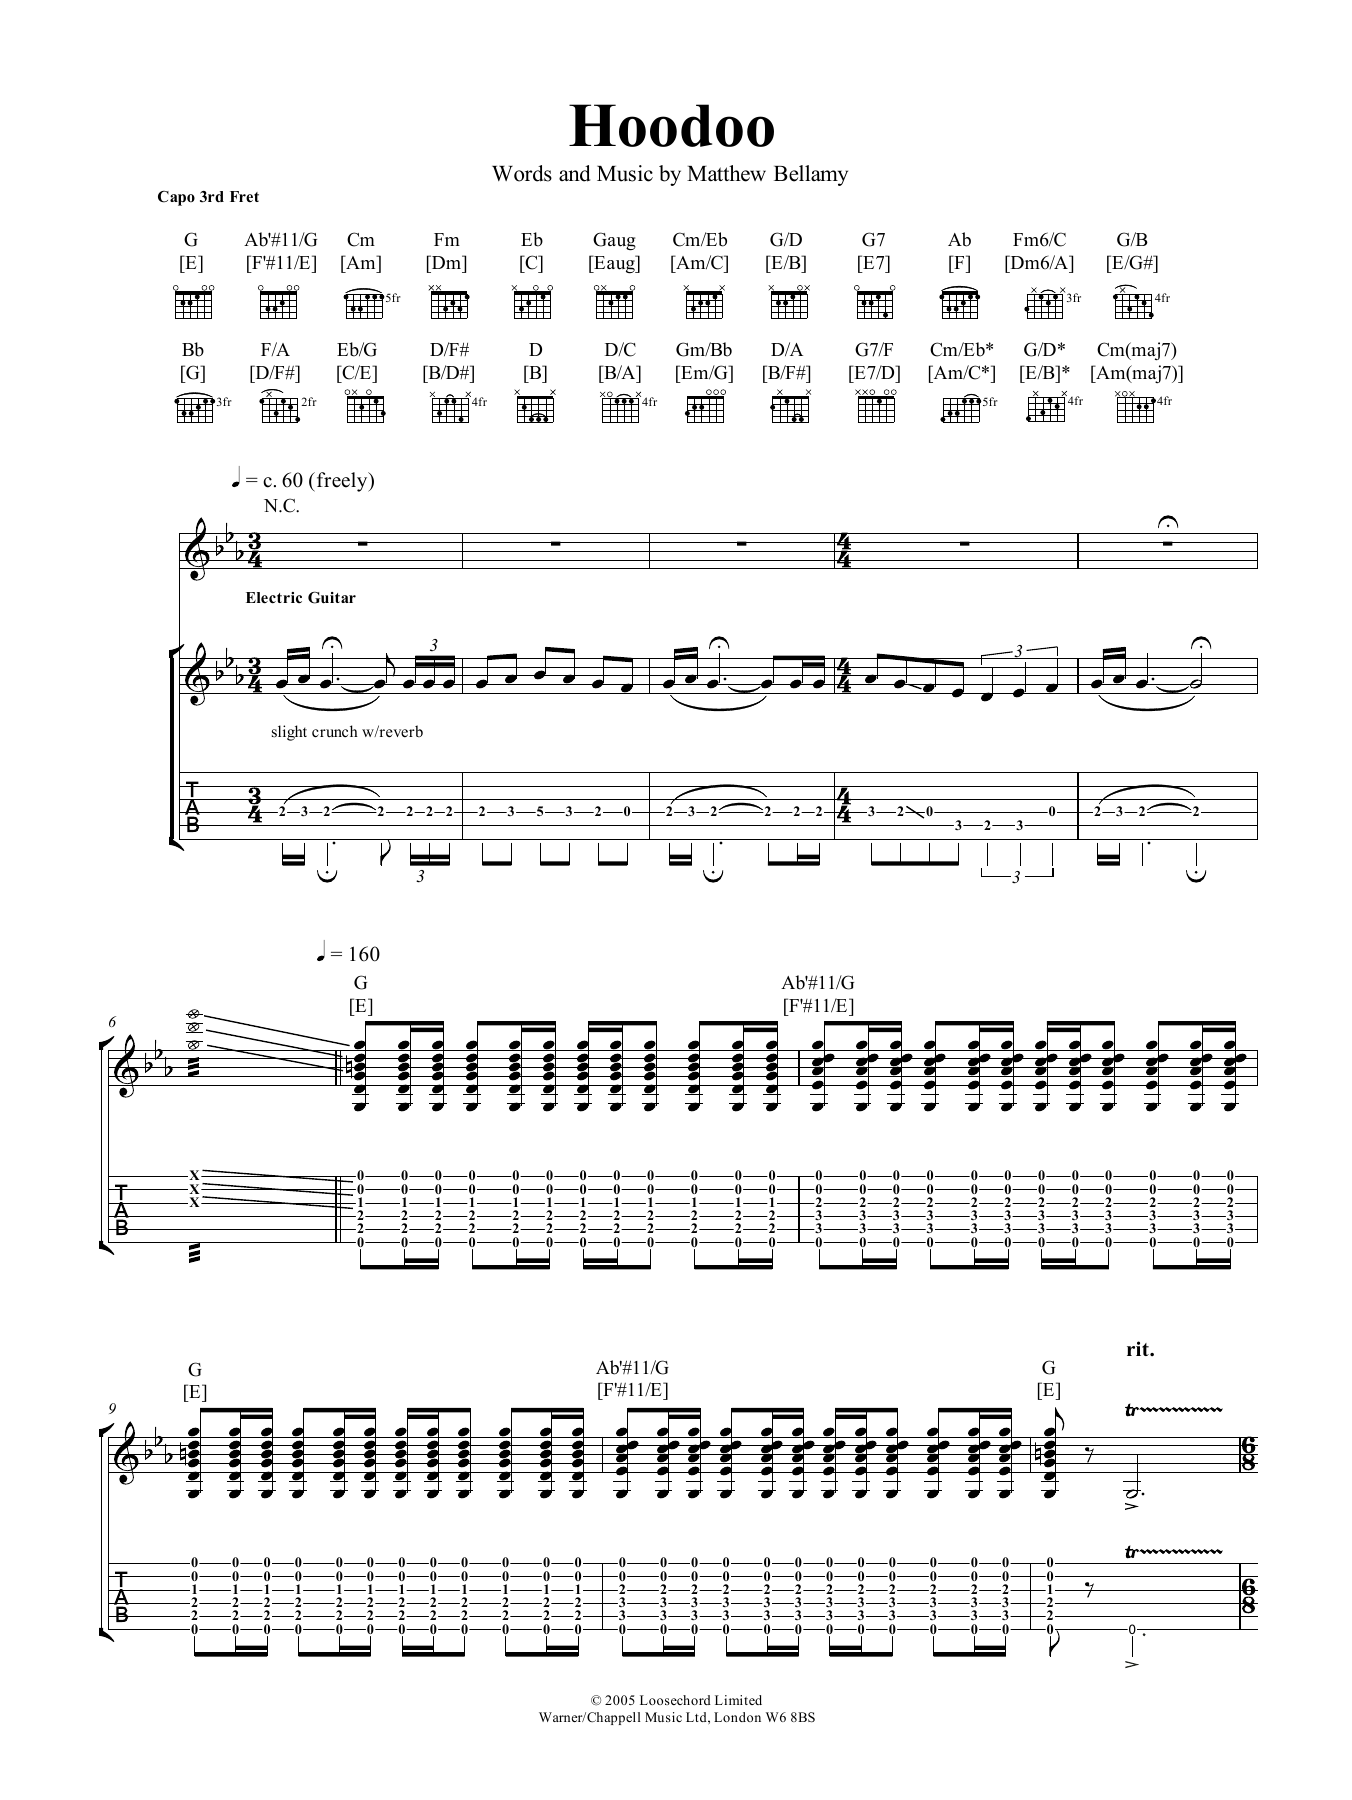 Muse Hoodoo Sheet Music Notes & Chords for Guitar Tab - Download or Print PDF